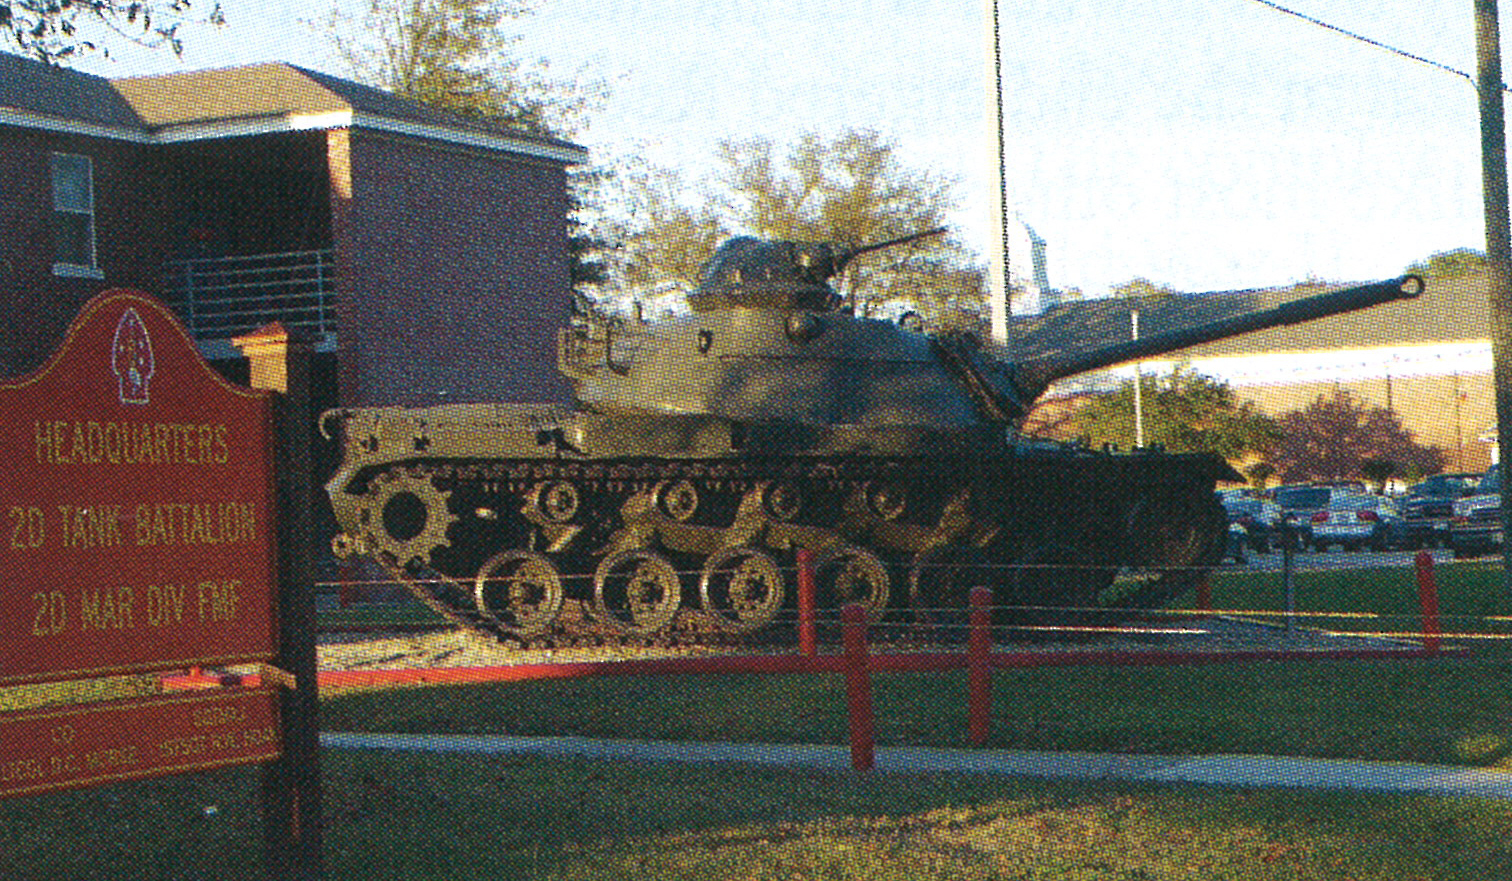 2nd Tank Battalion Headquarters